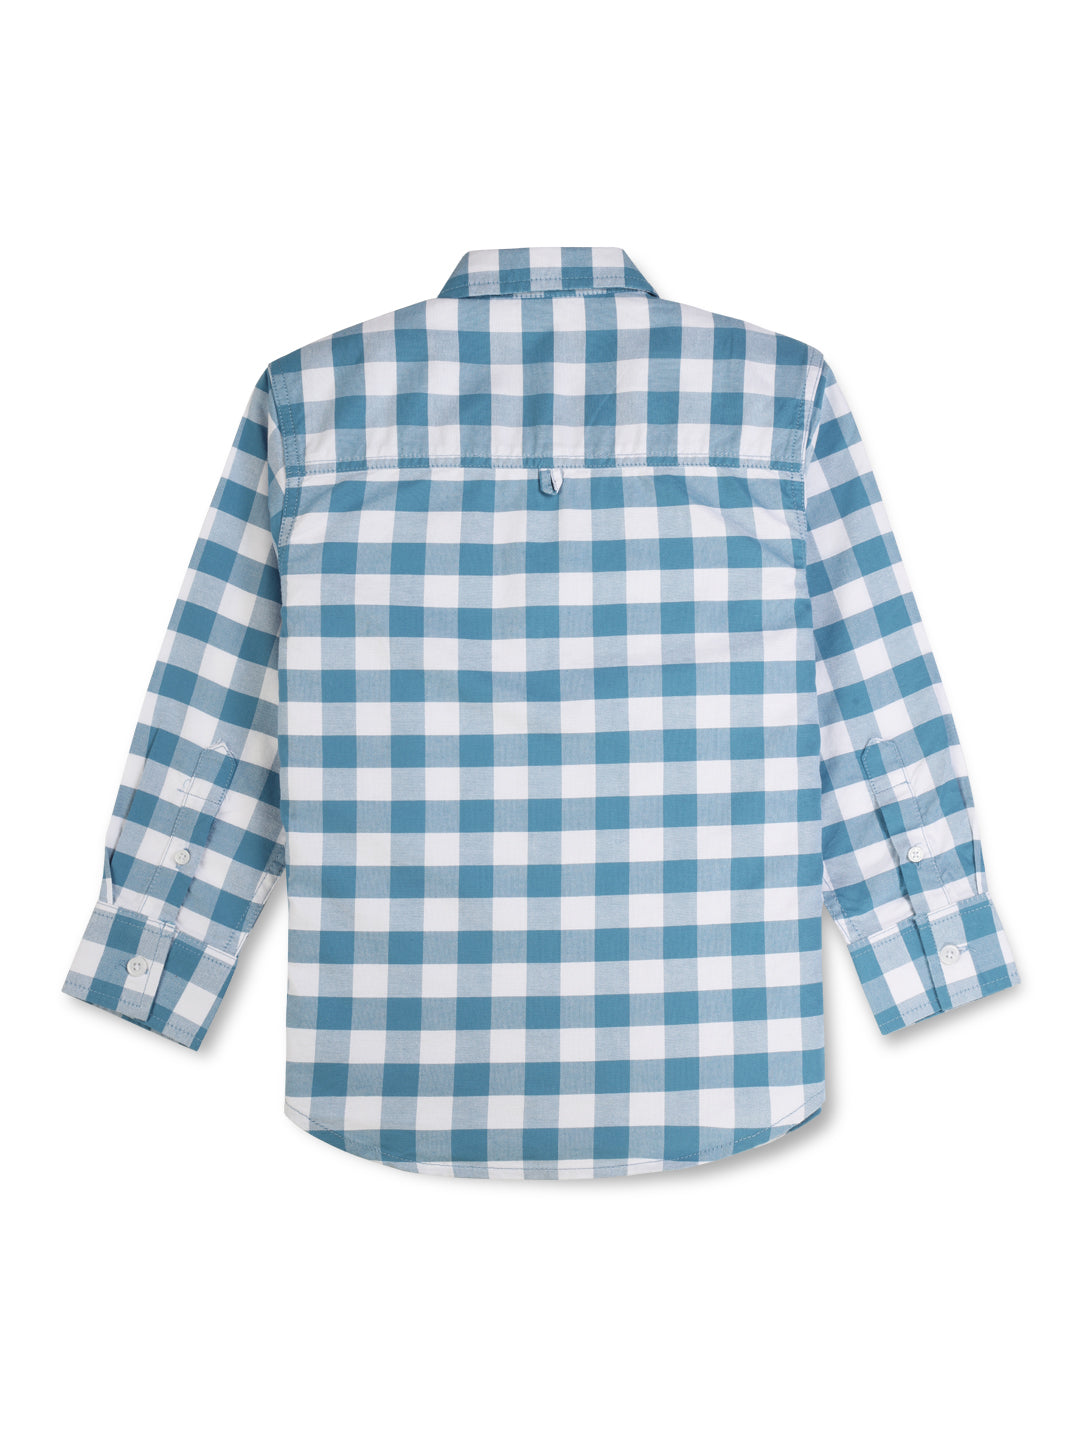 Boys Blue Checks Cotton Full Sleeves Shirt